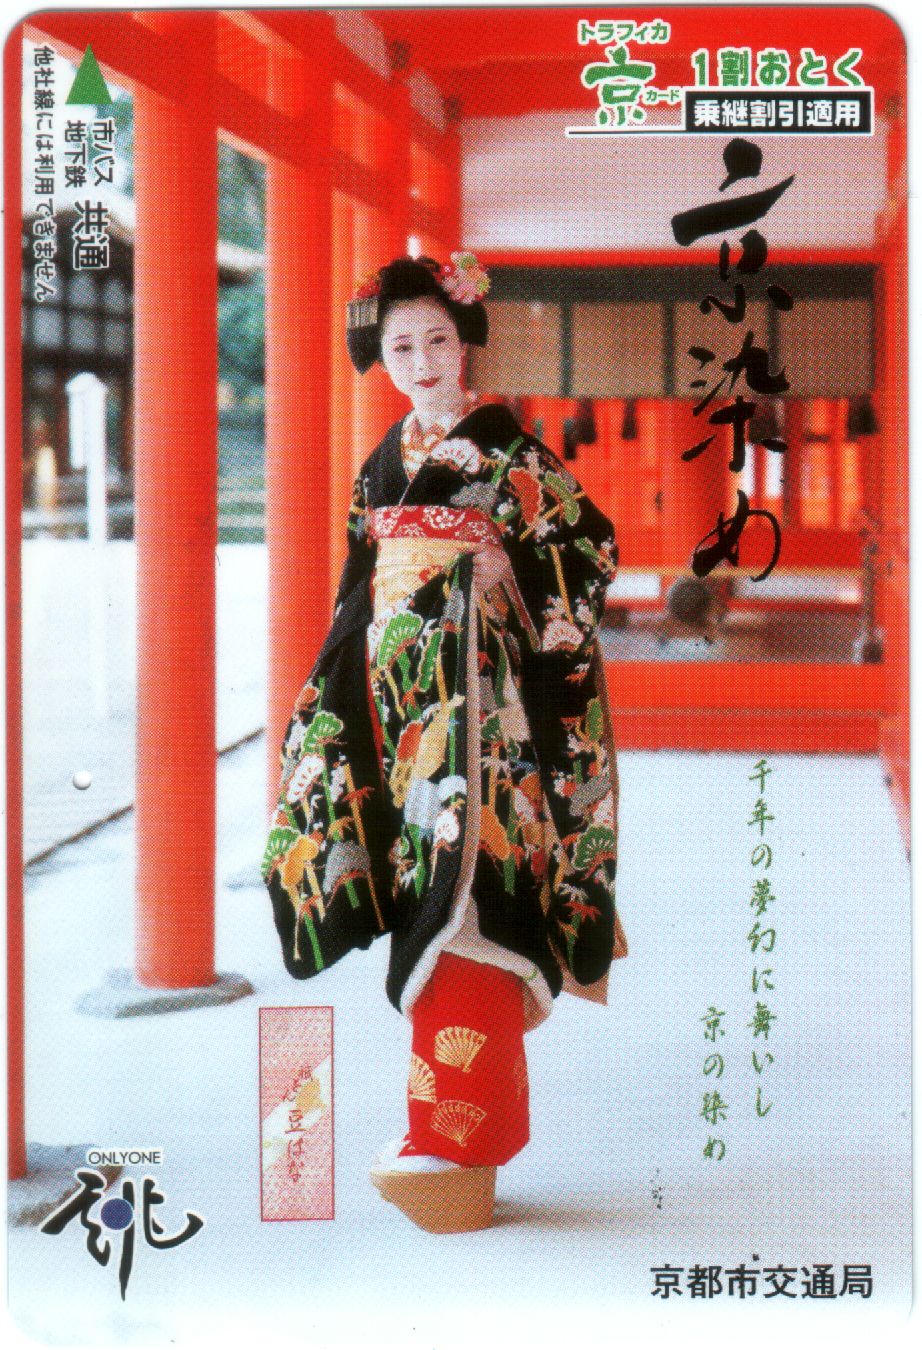 Miss Mamehana from Gion